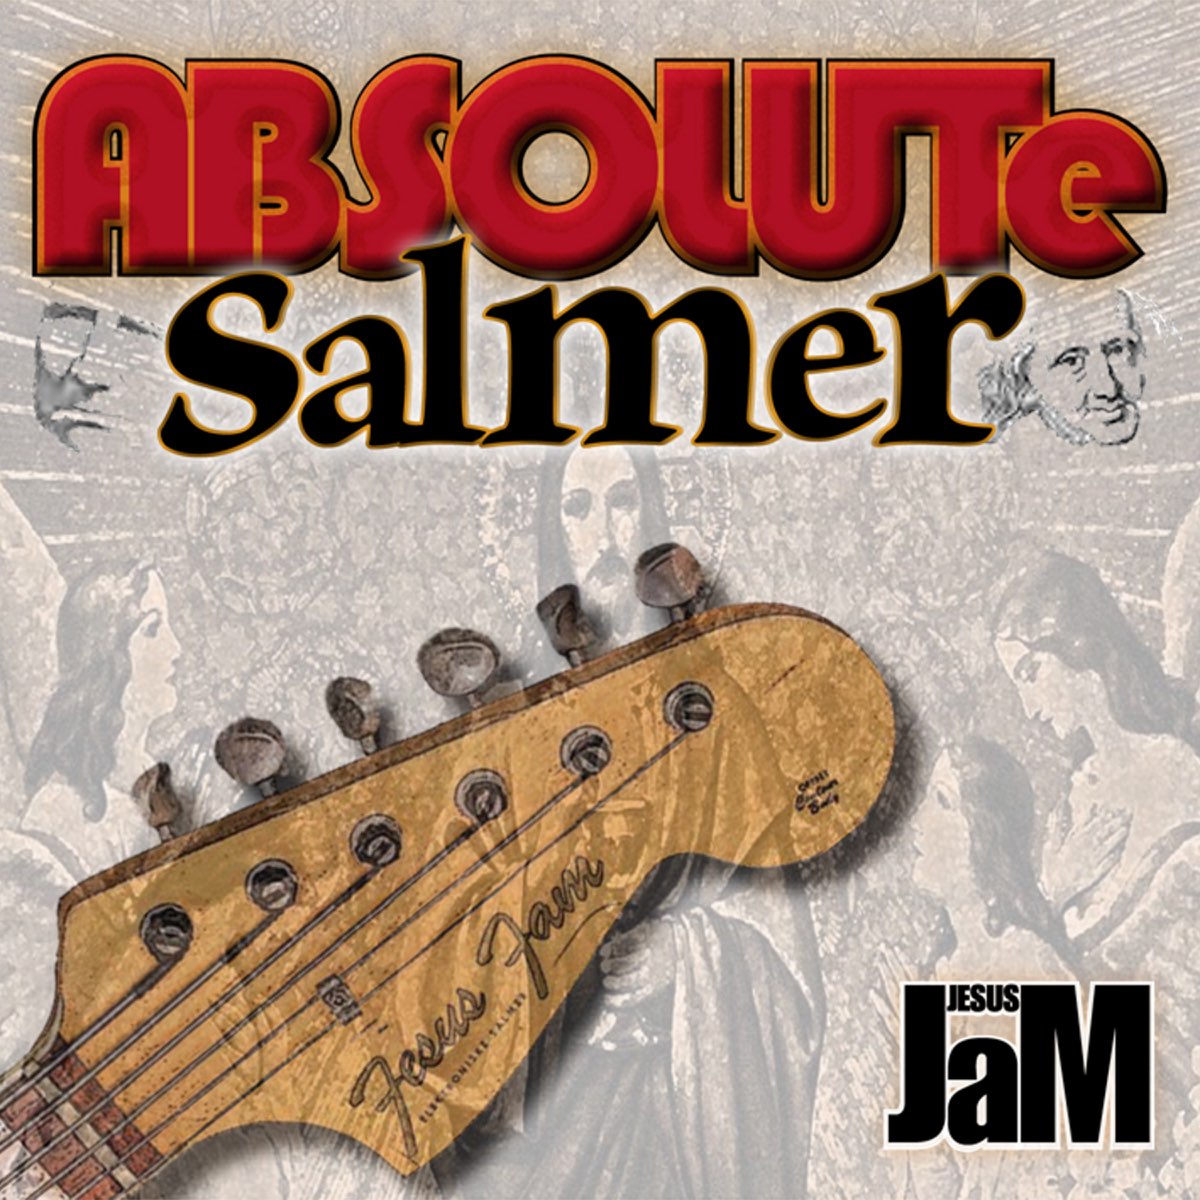 Absolute Salmer by Jesus Jam on Apple Music